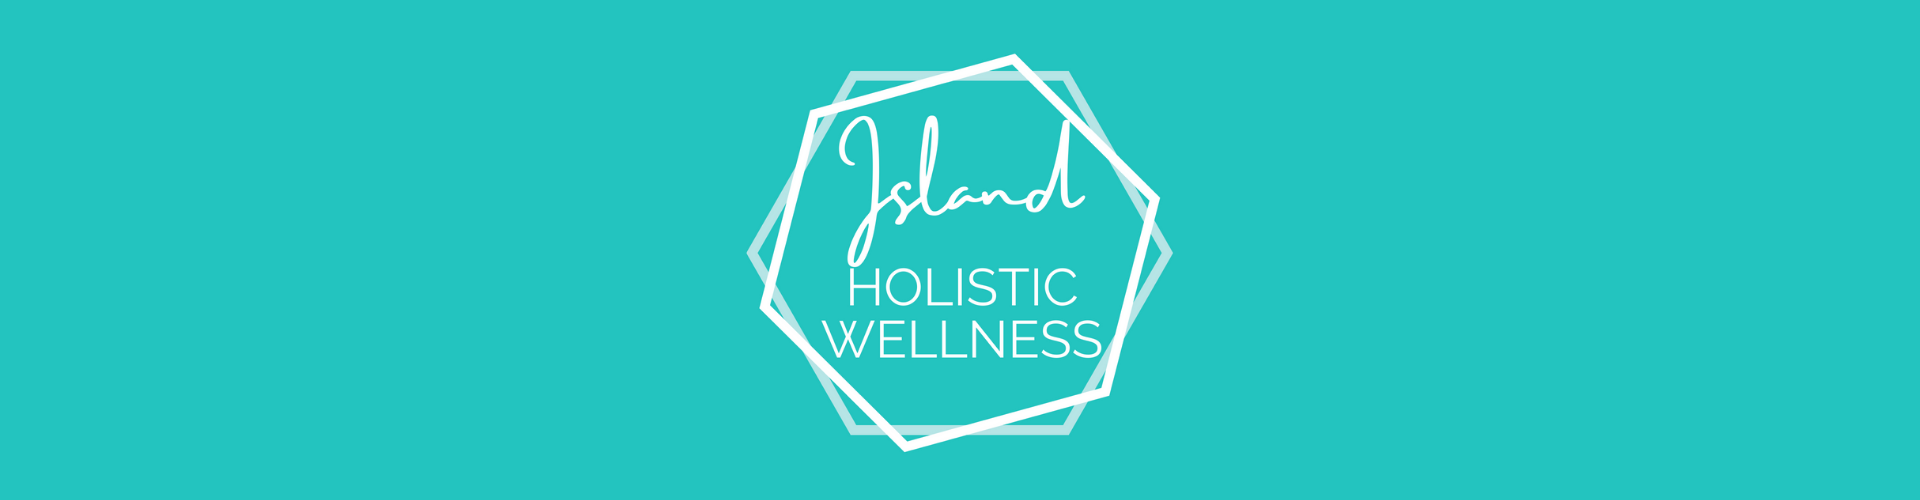 Island Holistic Wellness